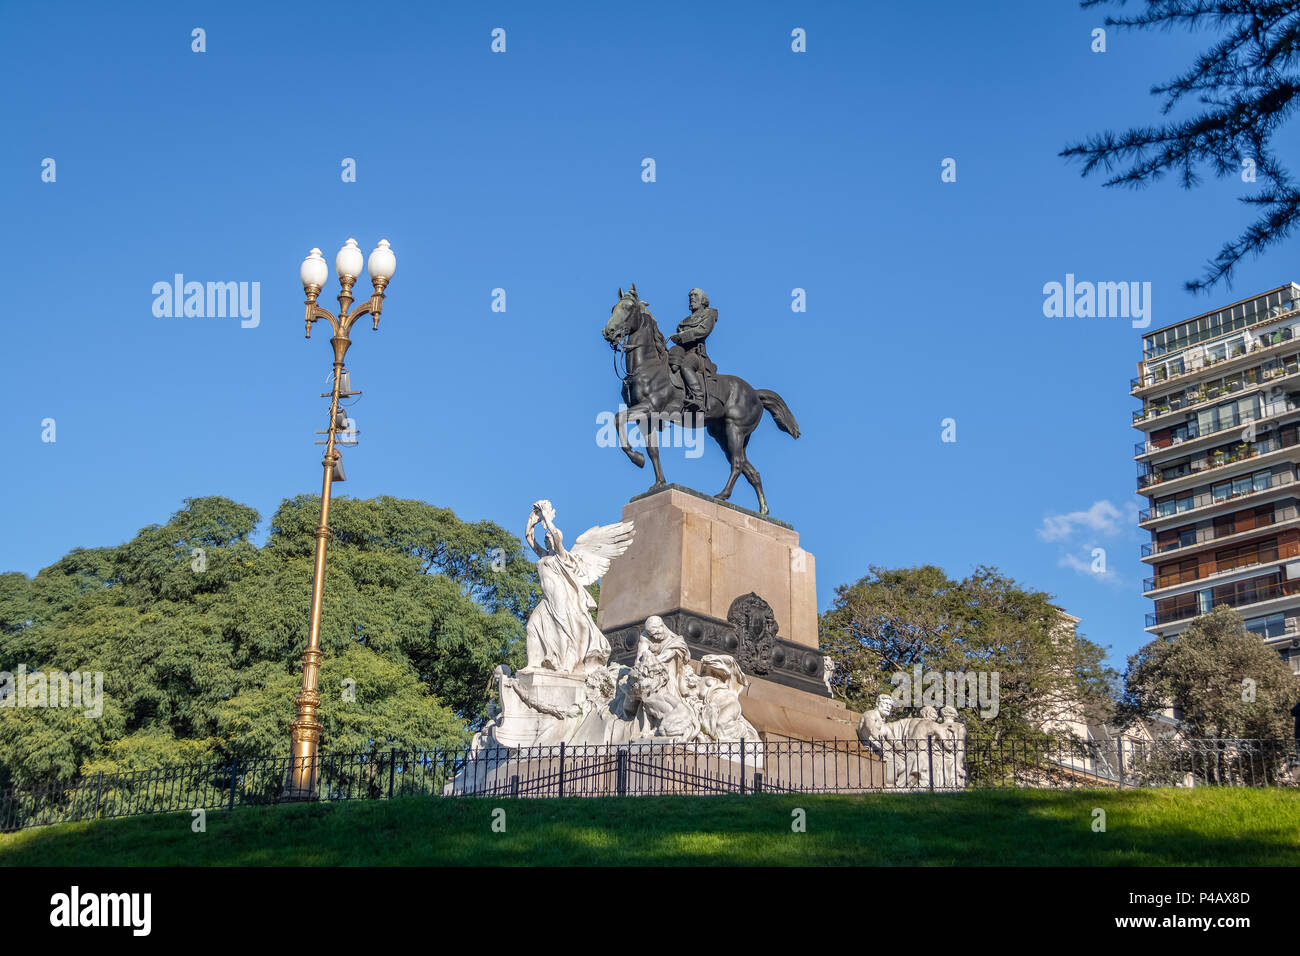 Plaza Mitre (Mitre Square) - Buenos Aires, Argentina Foto Stock